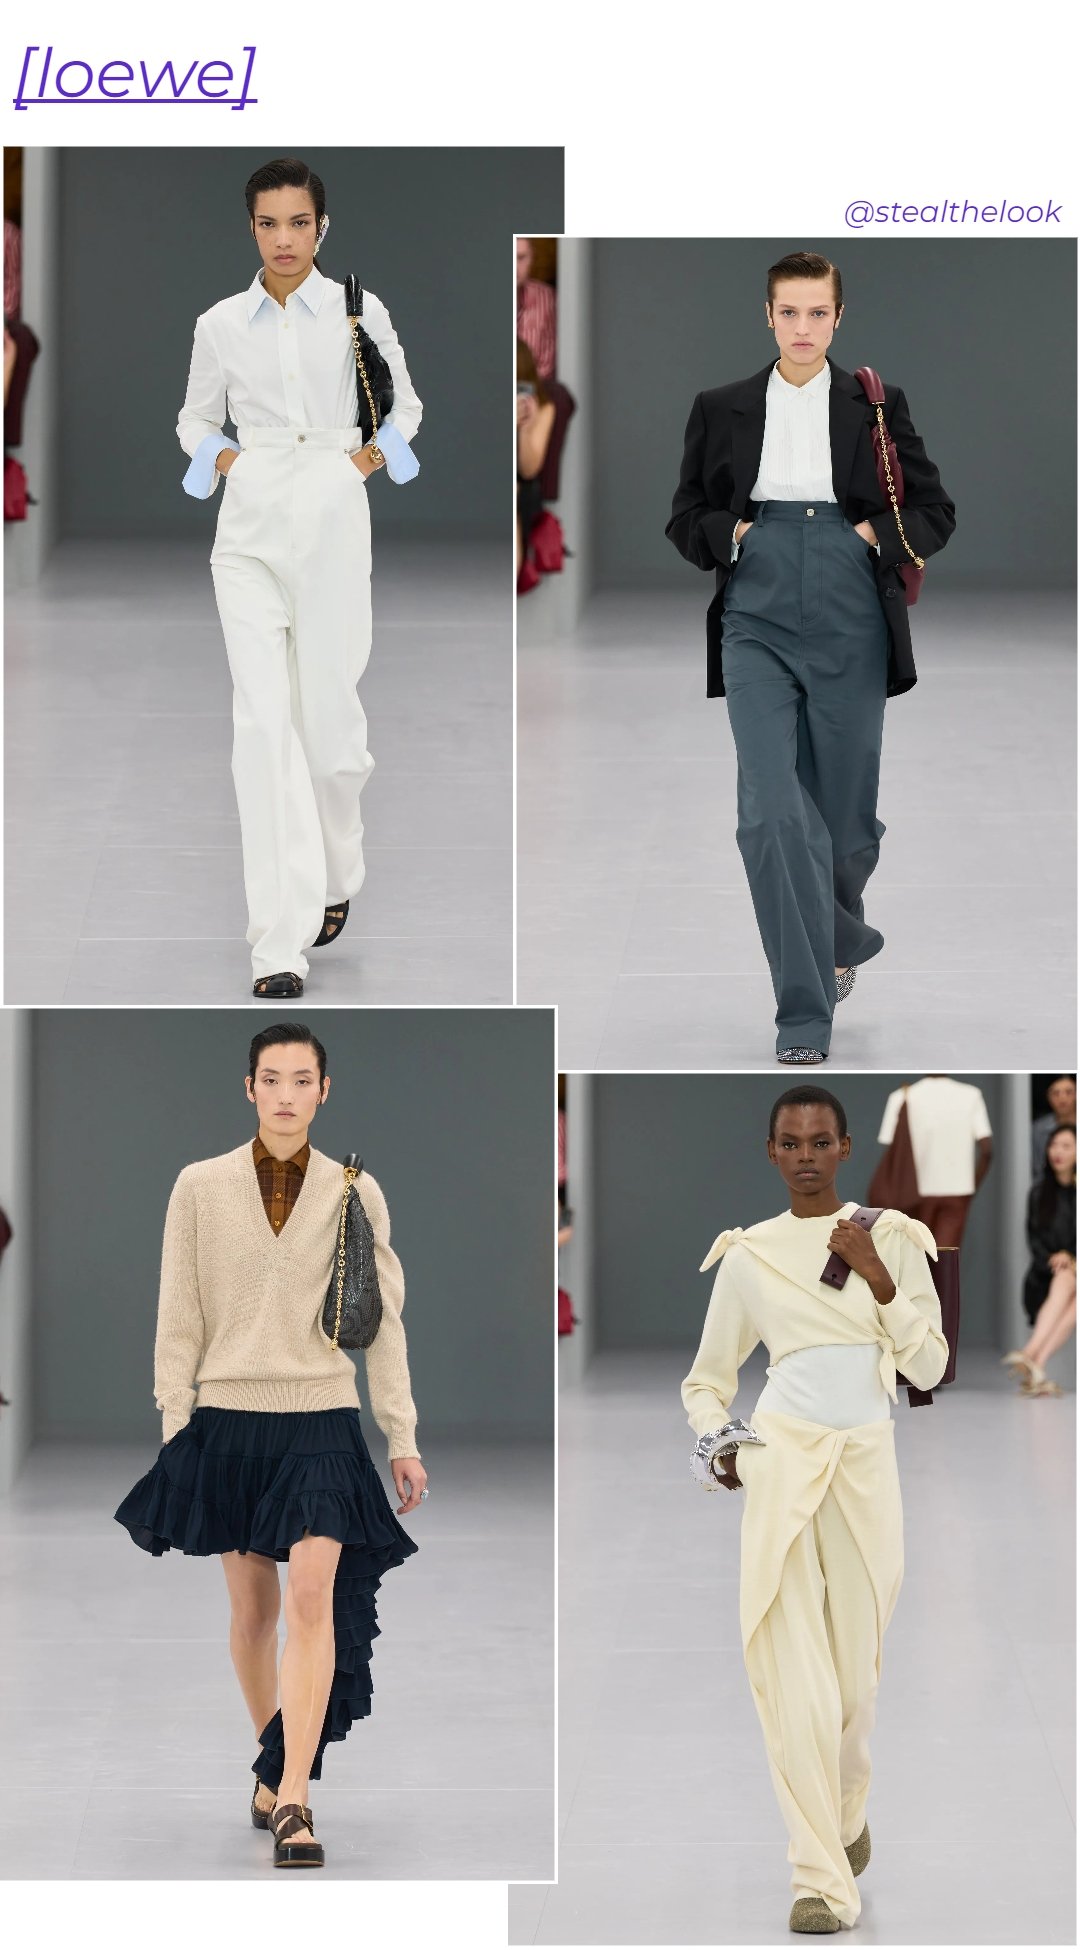 Loewe - roupas diversas - Paris Fashion Week - verão - colagem de imagens - https://stealthelook.com.br